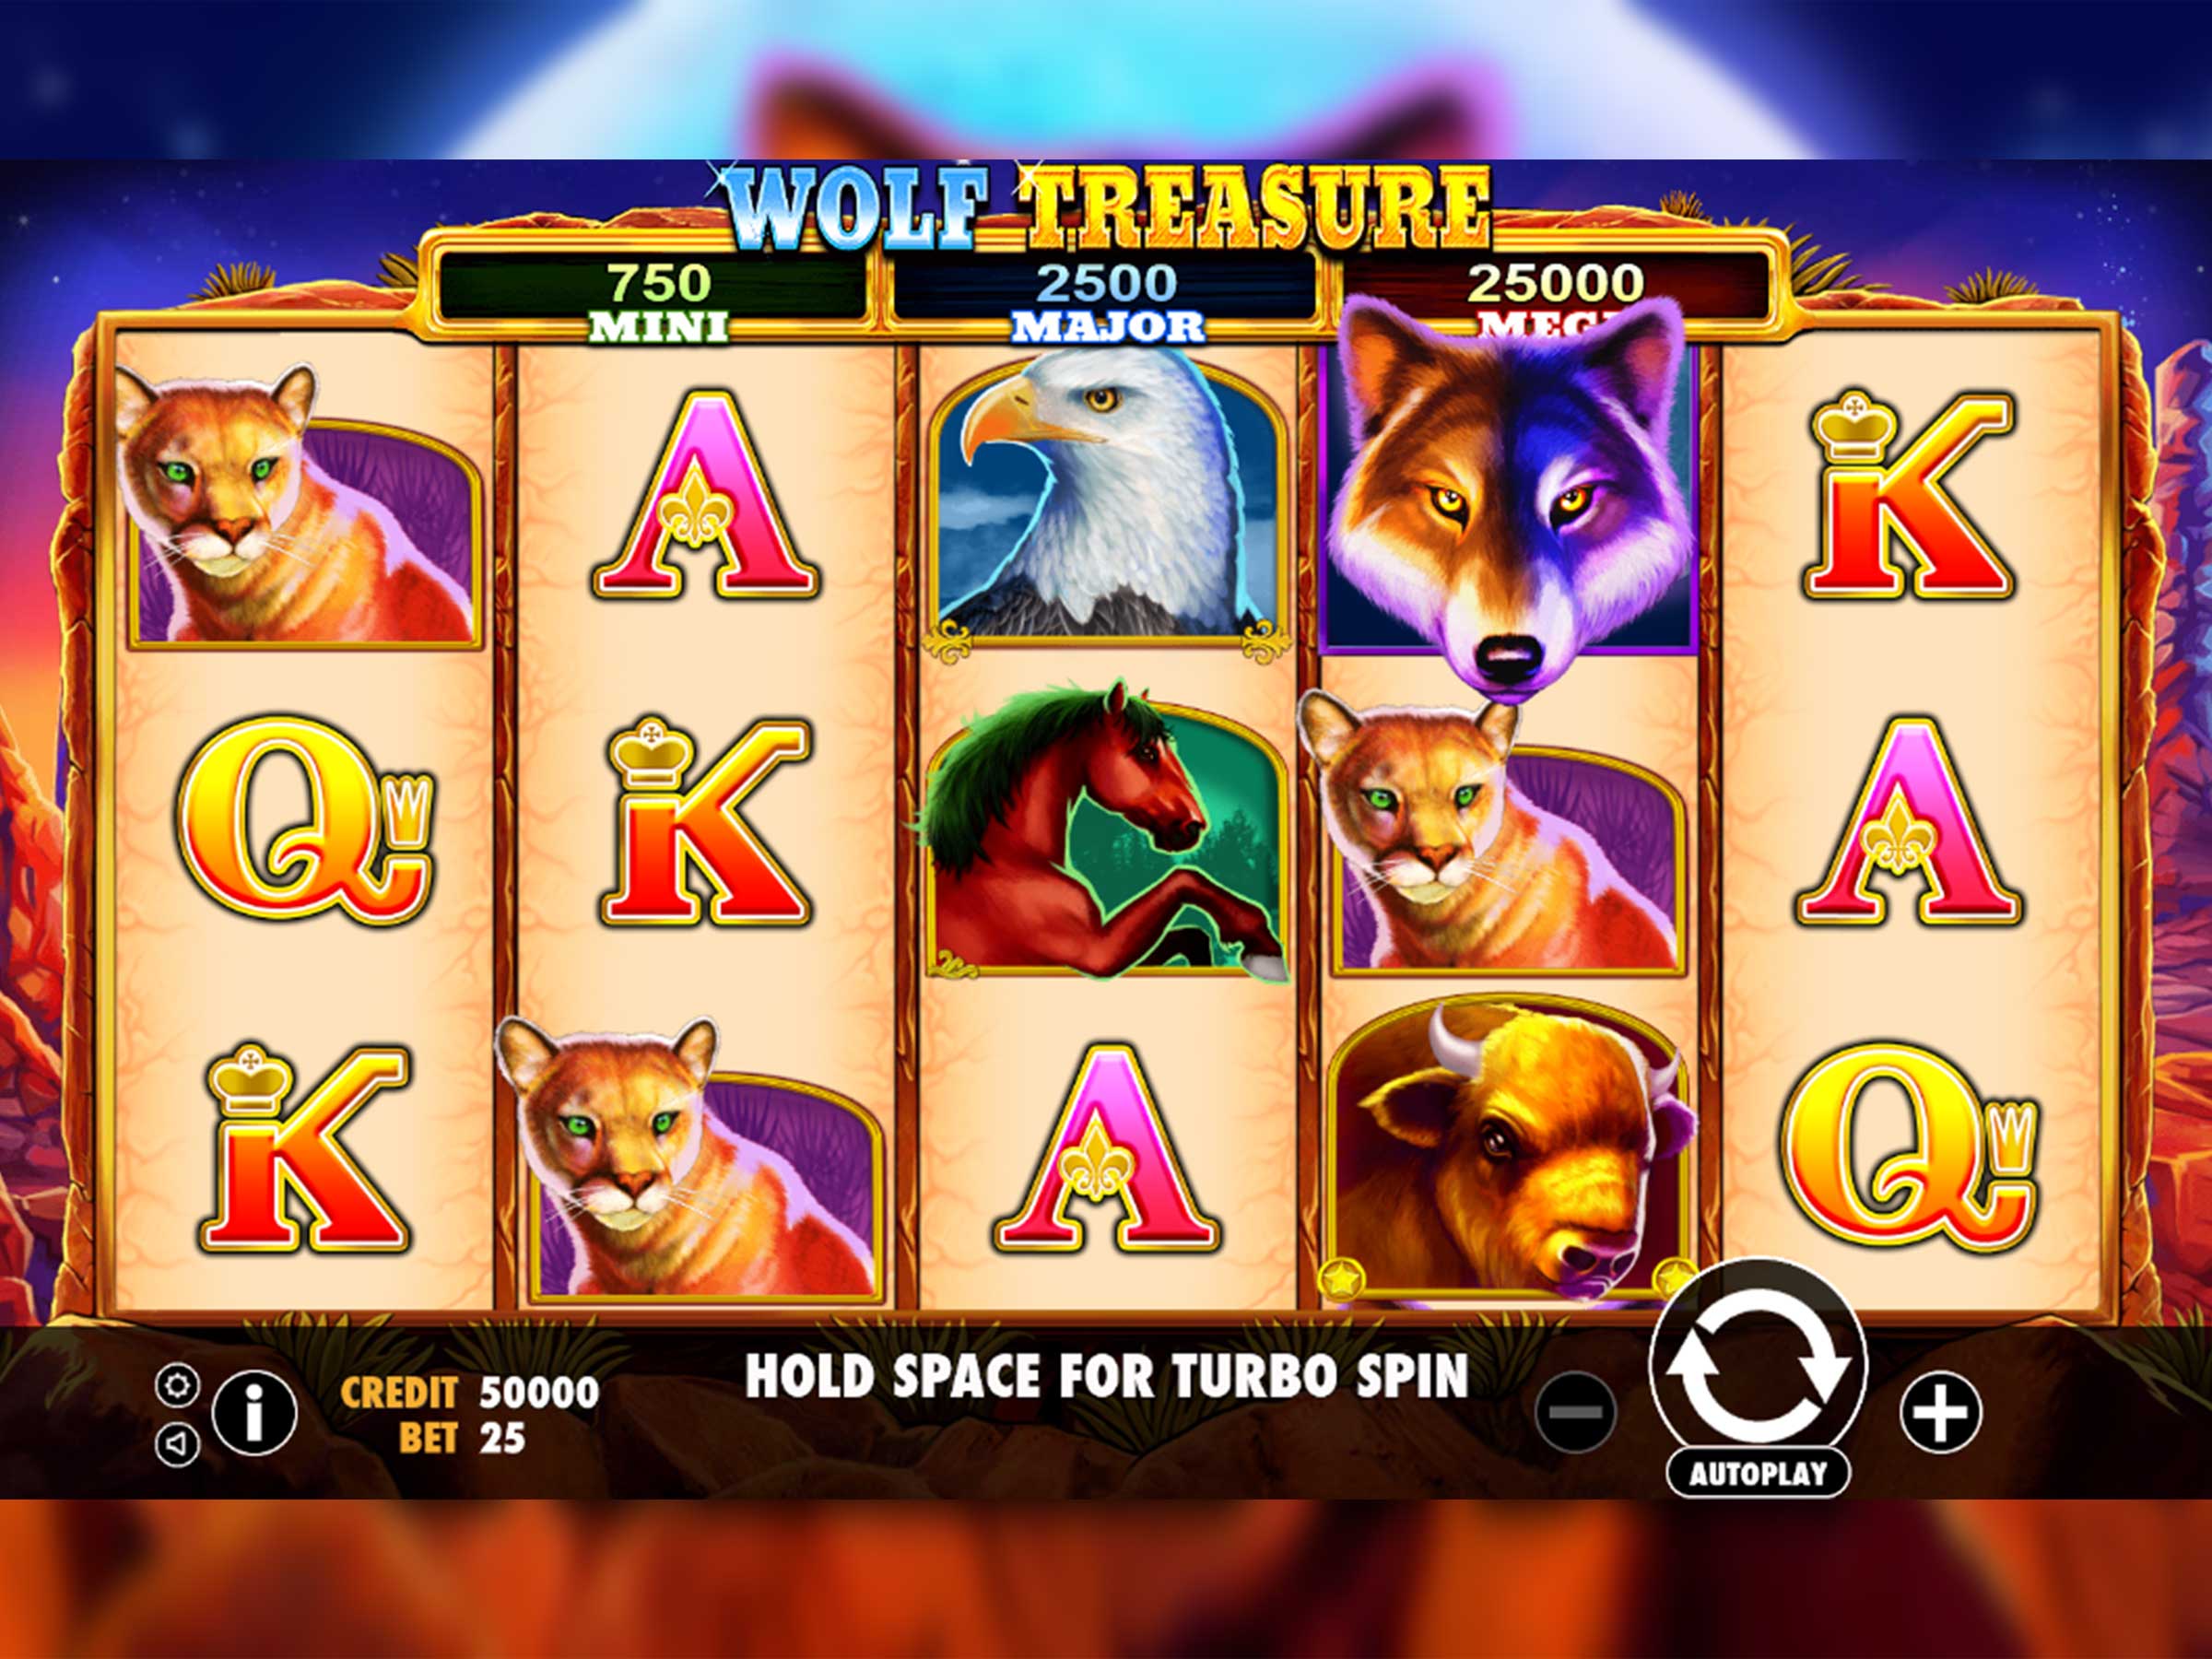 wolf treasure slot